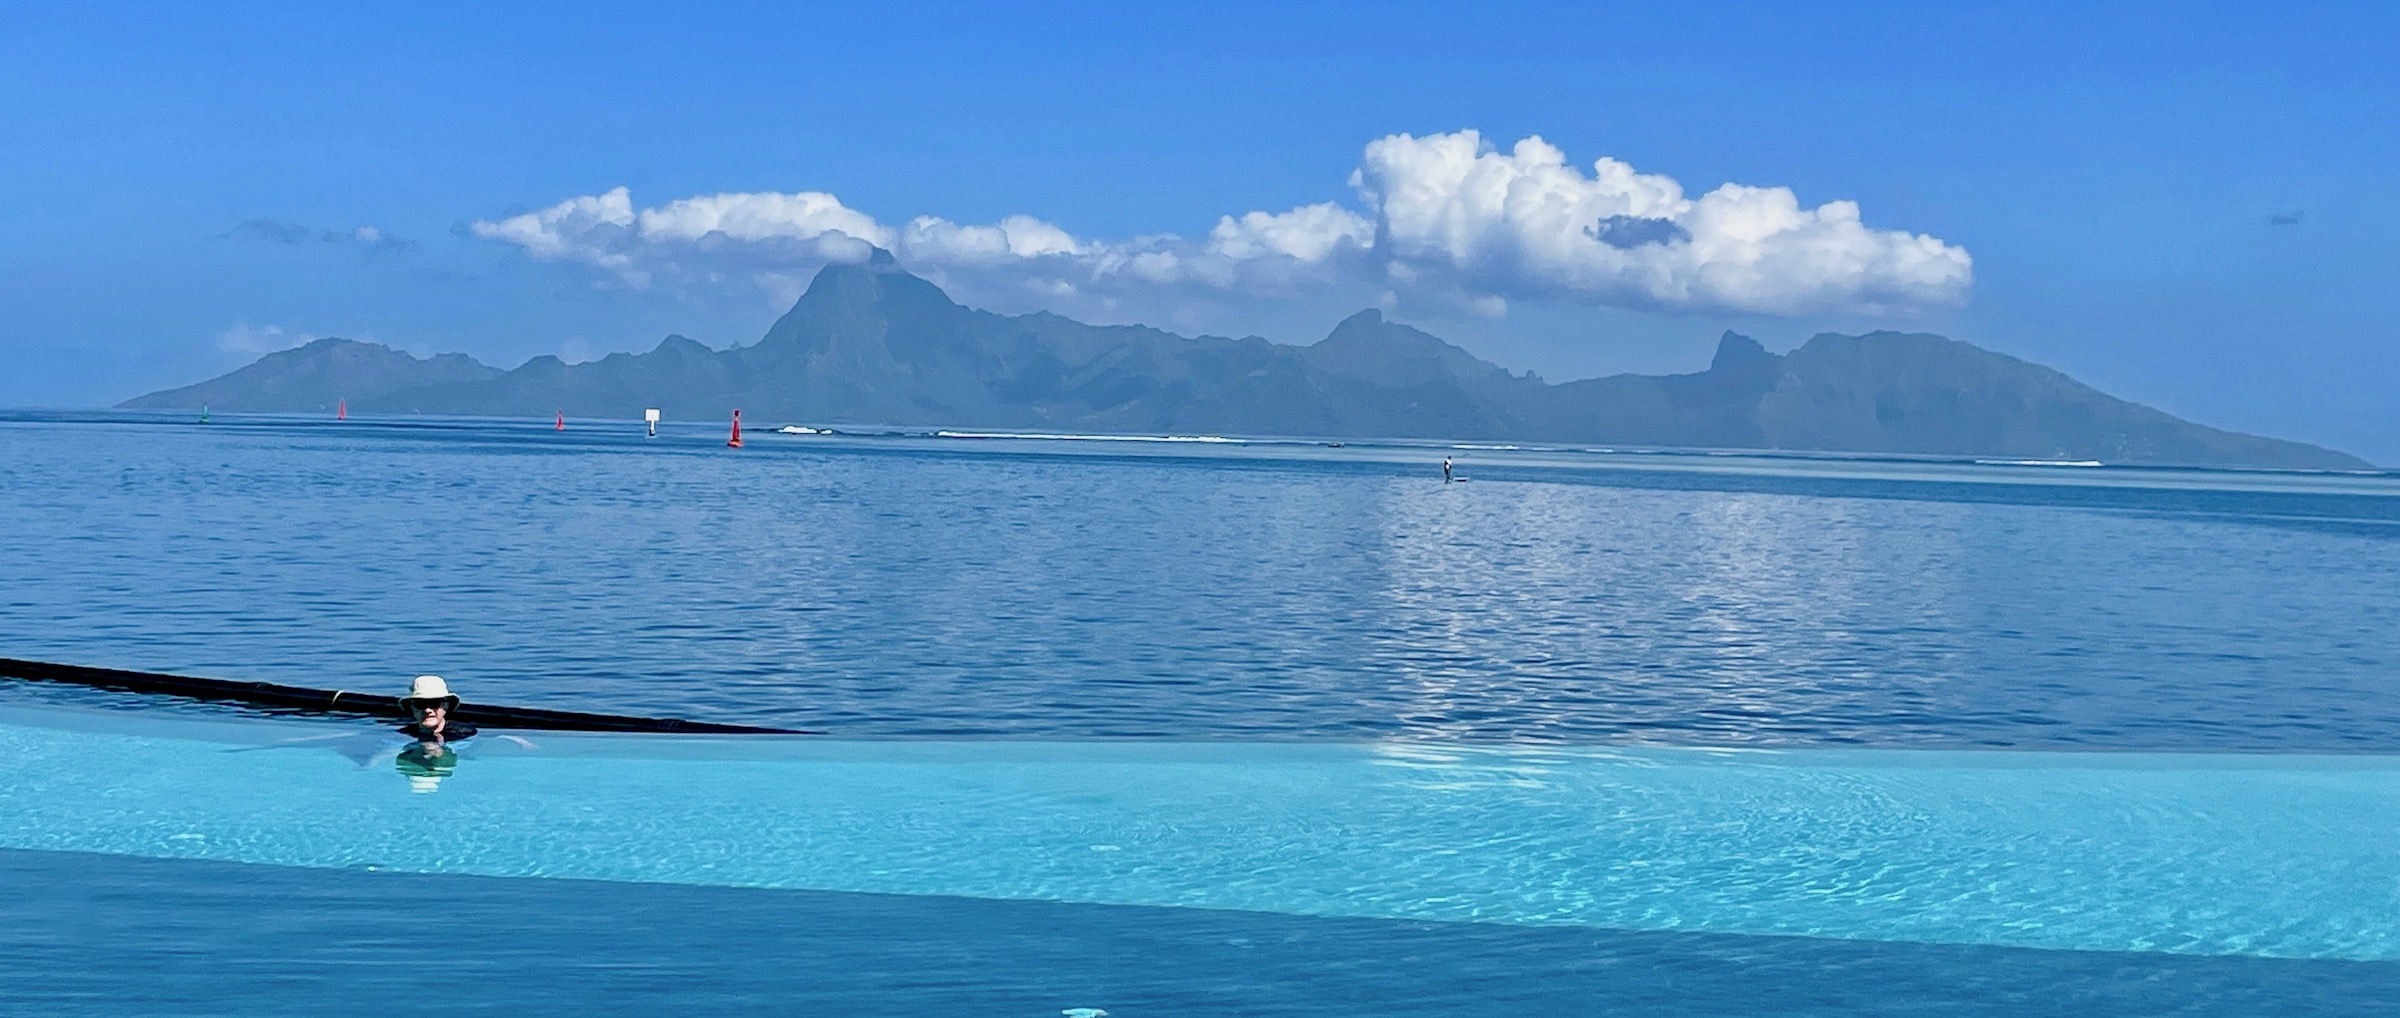 Infinity Pool and Moorea at Te Moana Resort